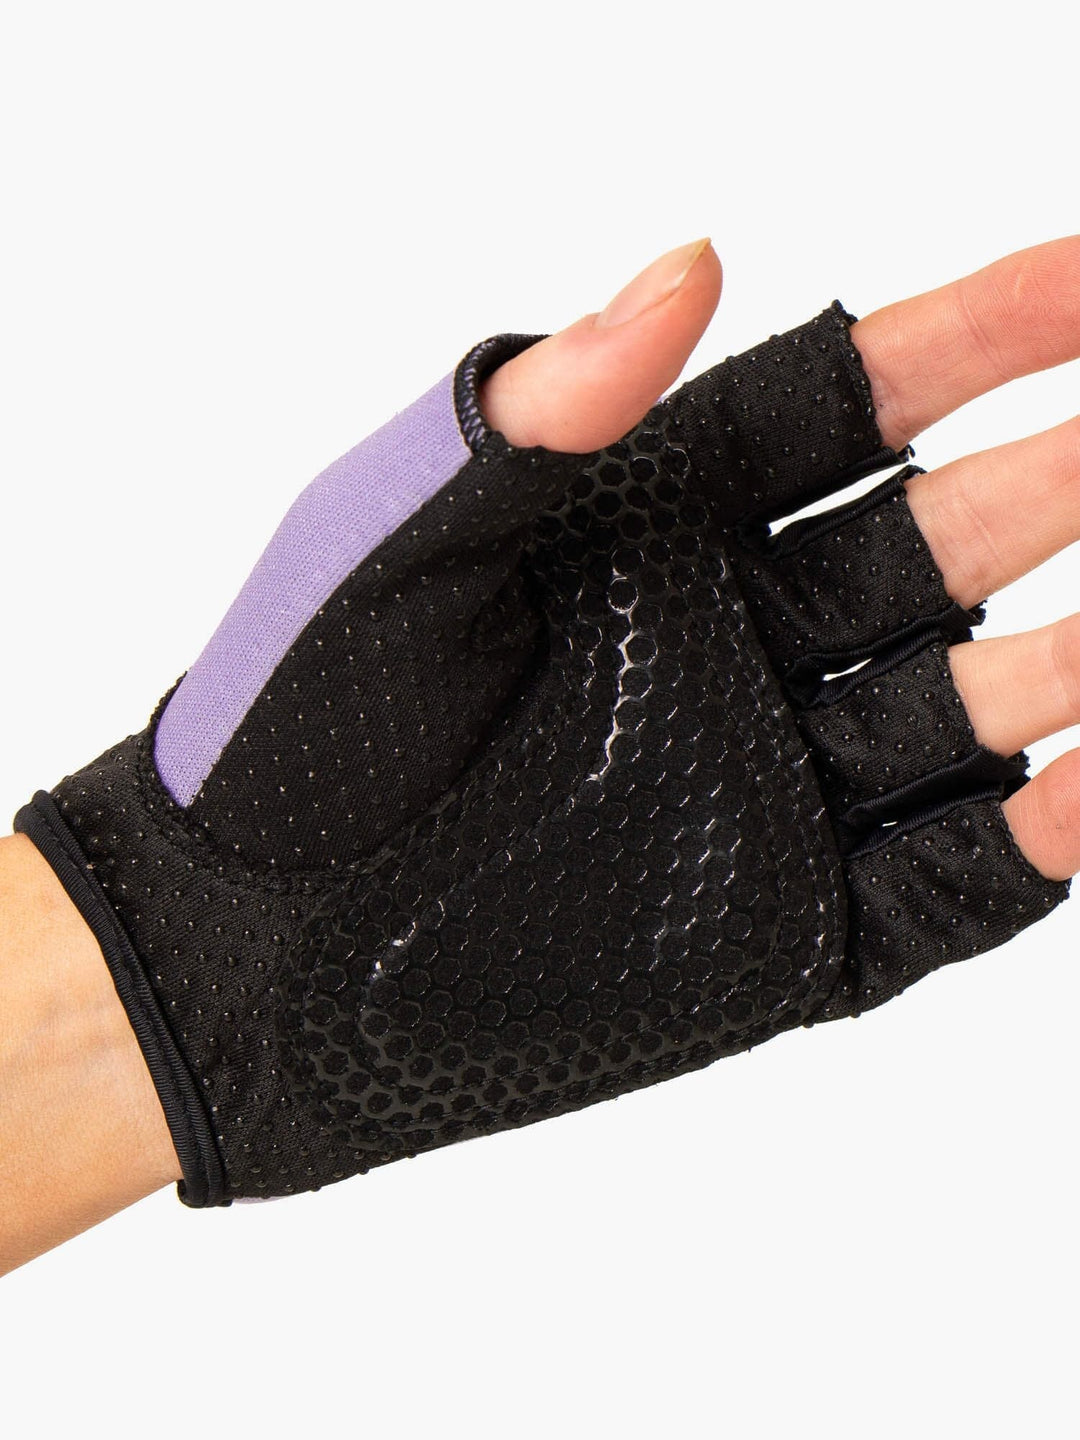 Lifting Gloves - Lavender Accessories Ryderwear 